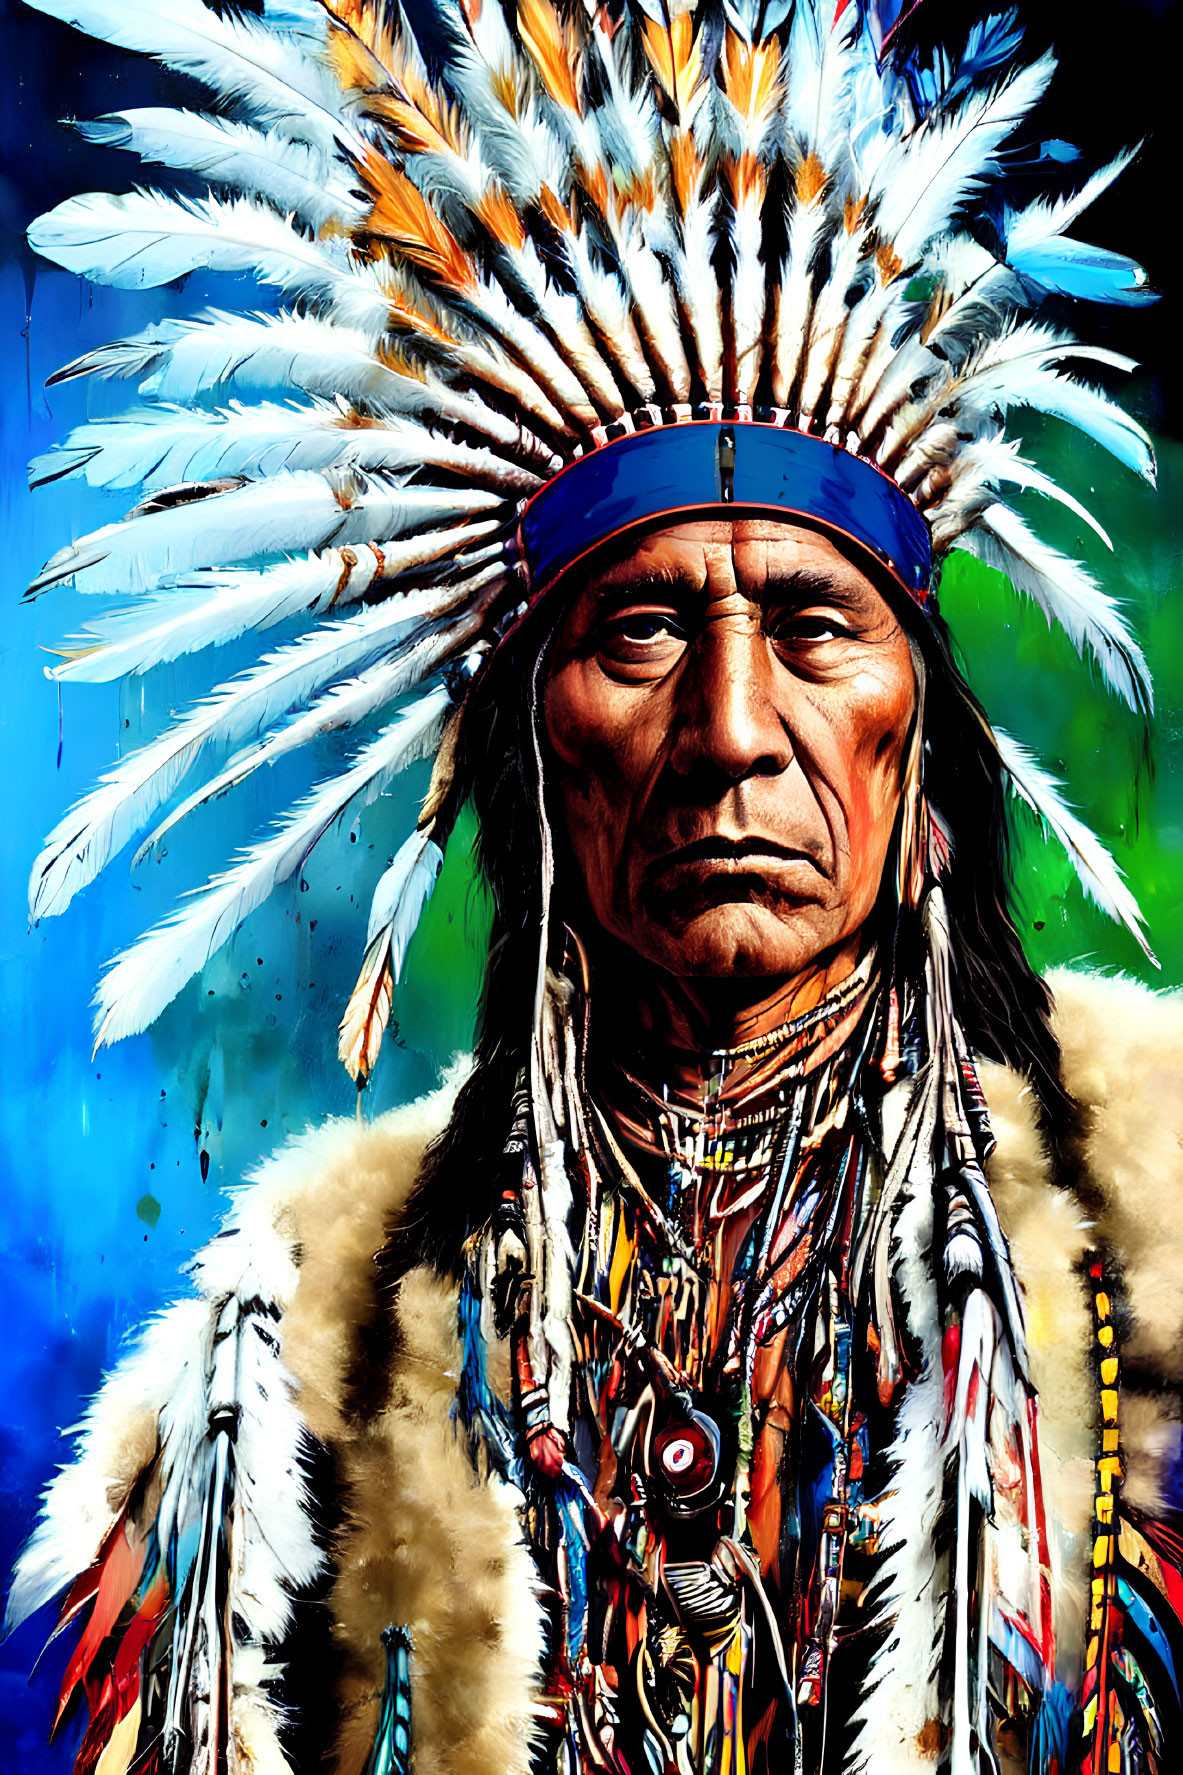 Colorful illustration of a person in Native American headdress & regalia